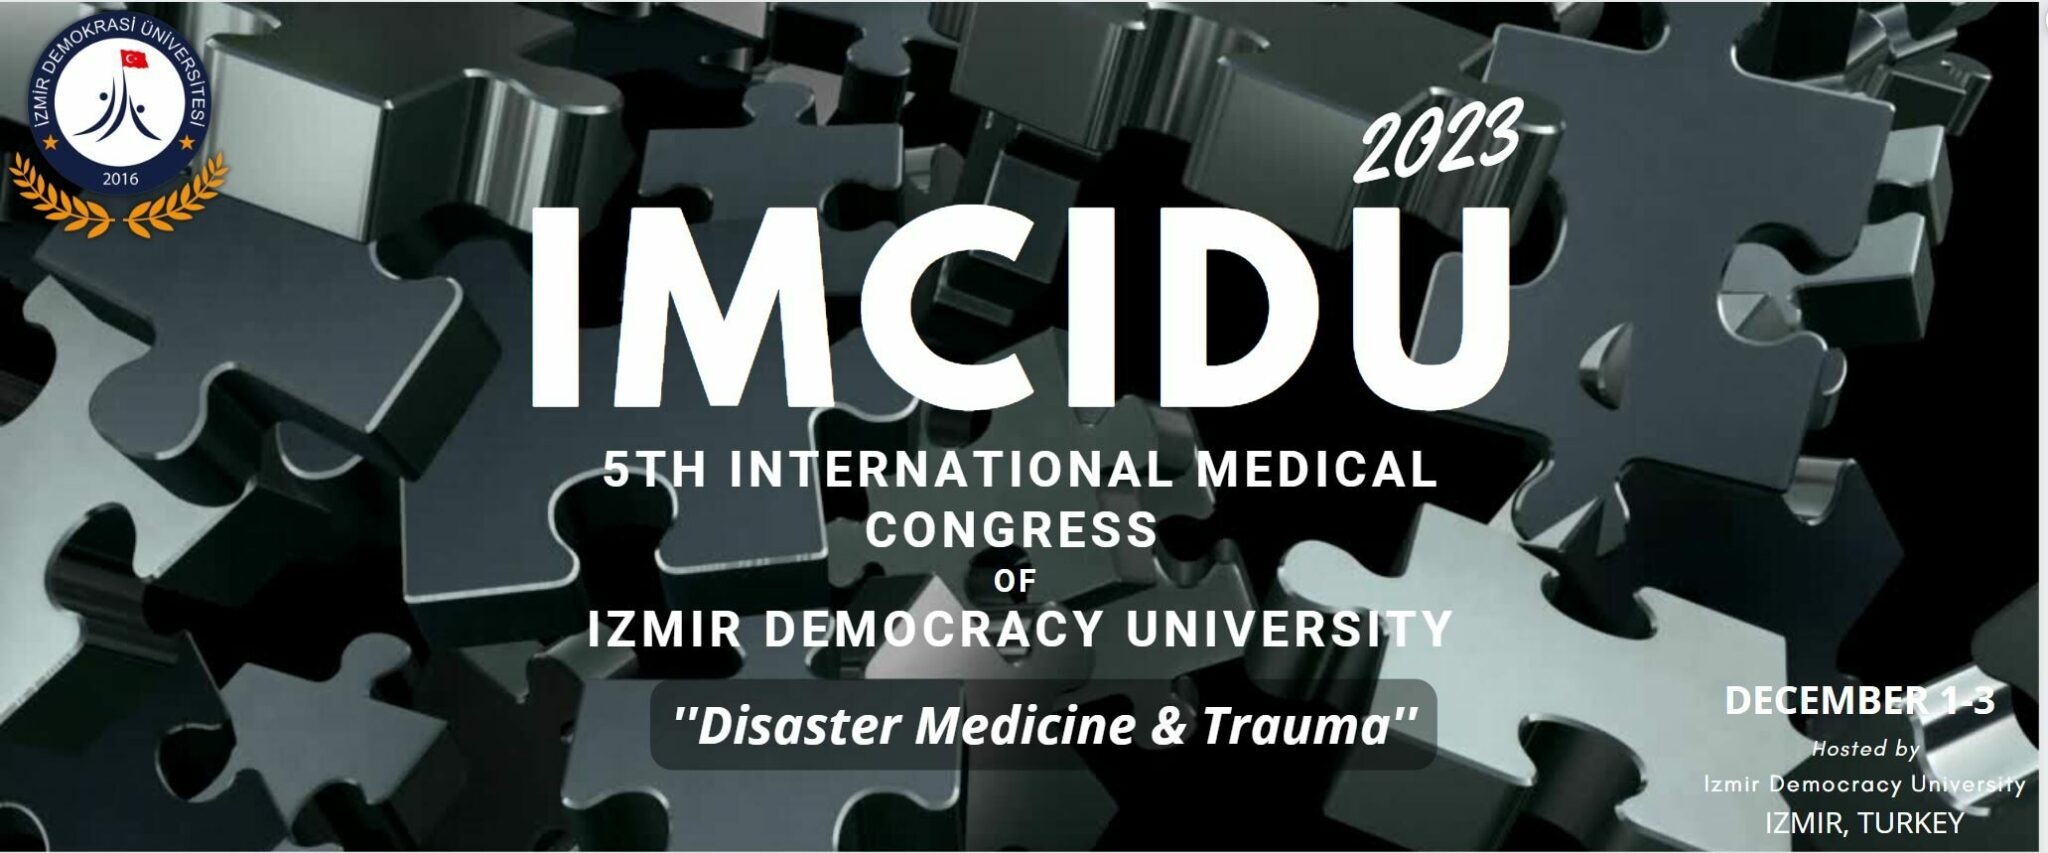 International Medical Congress of Izmir Democracy University 2023